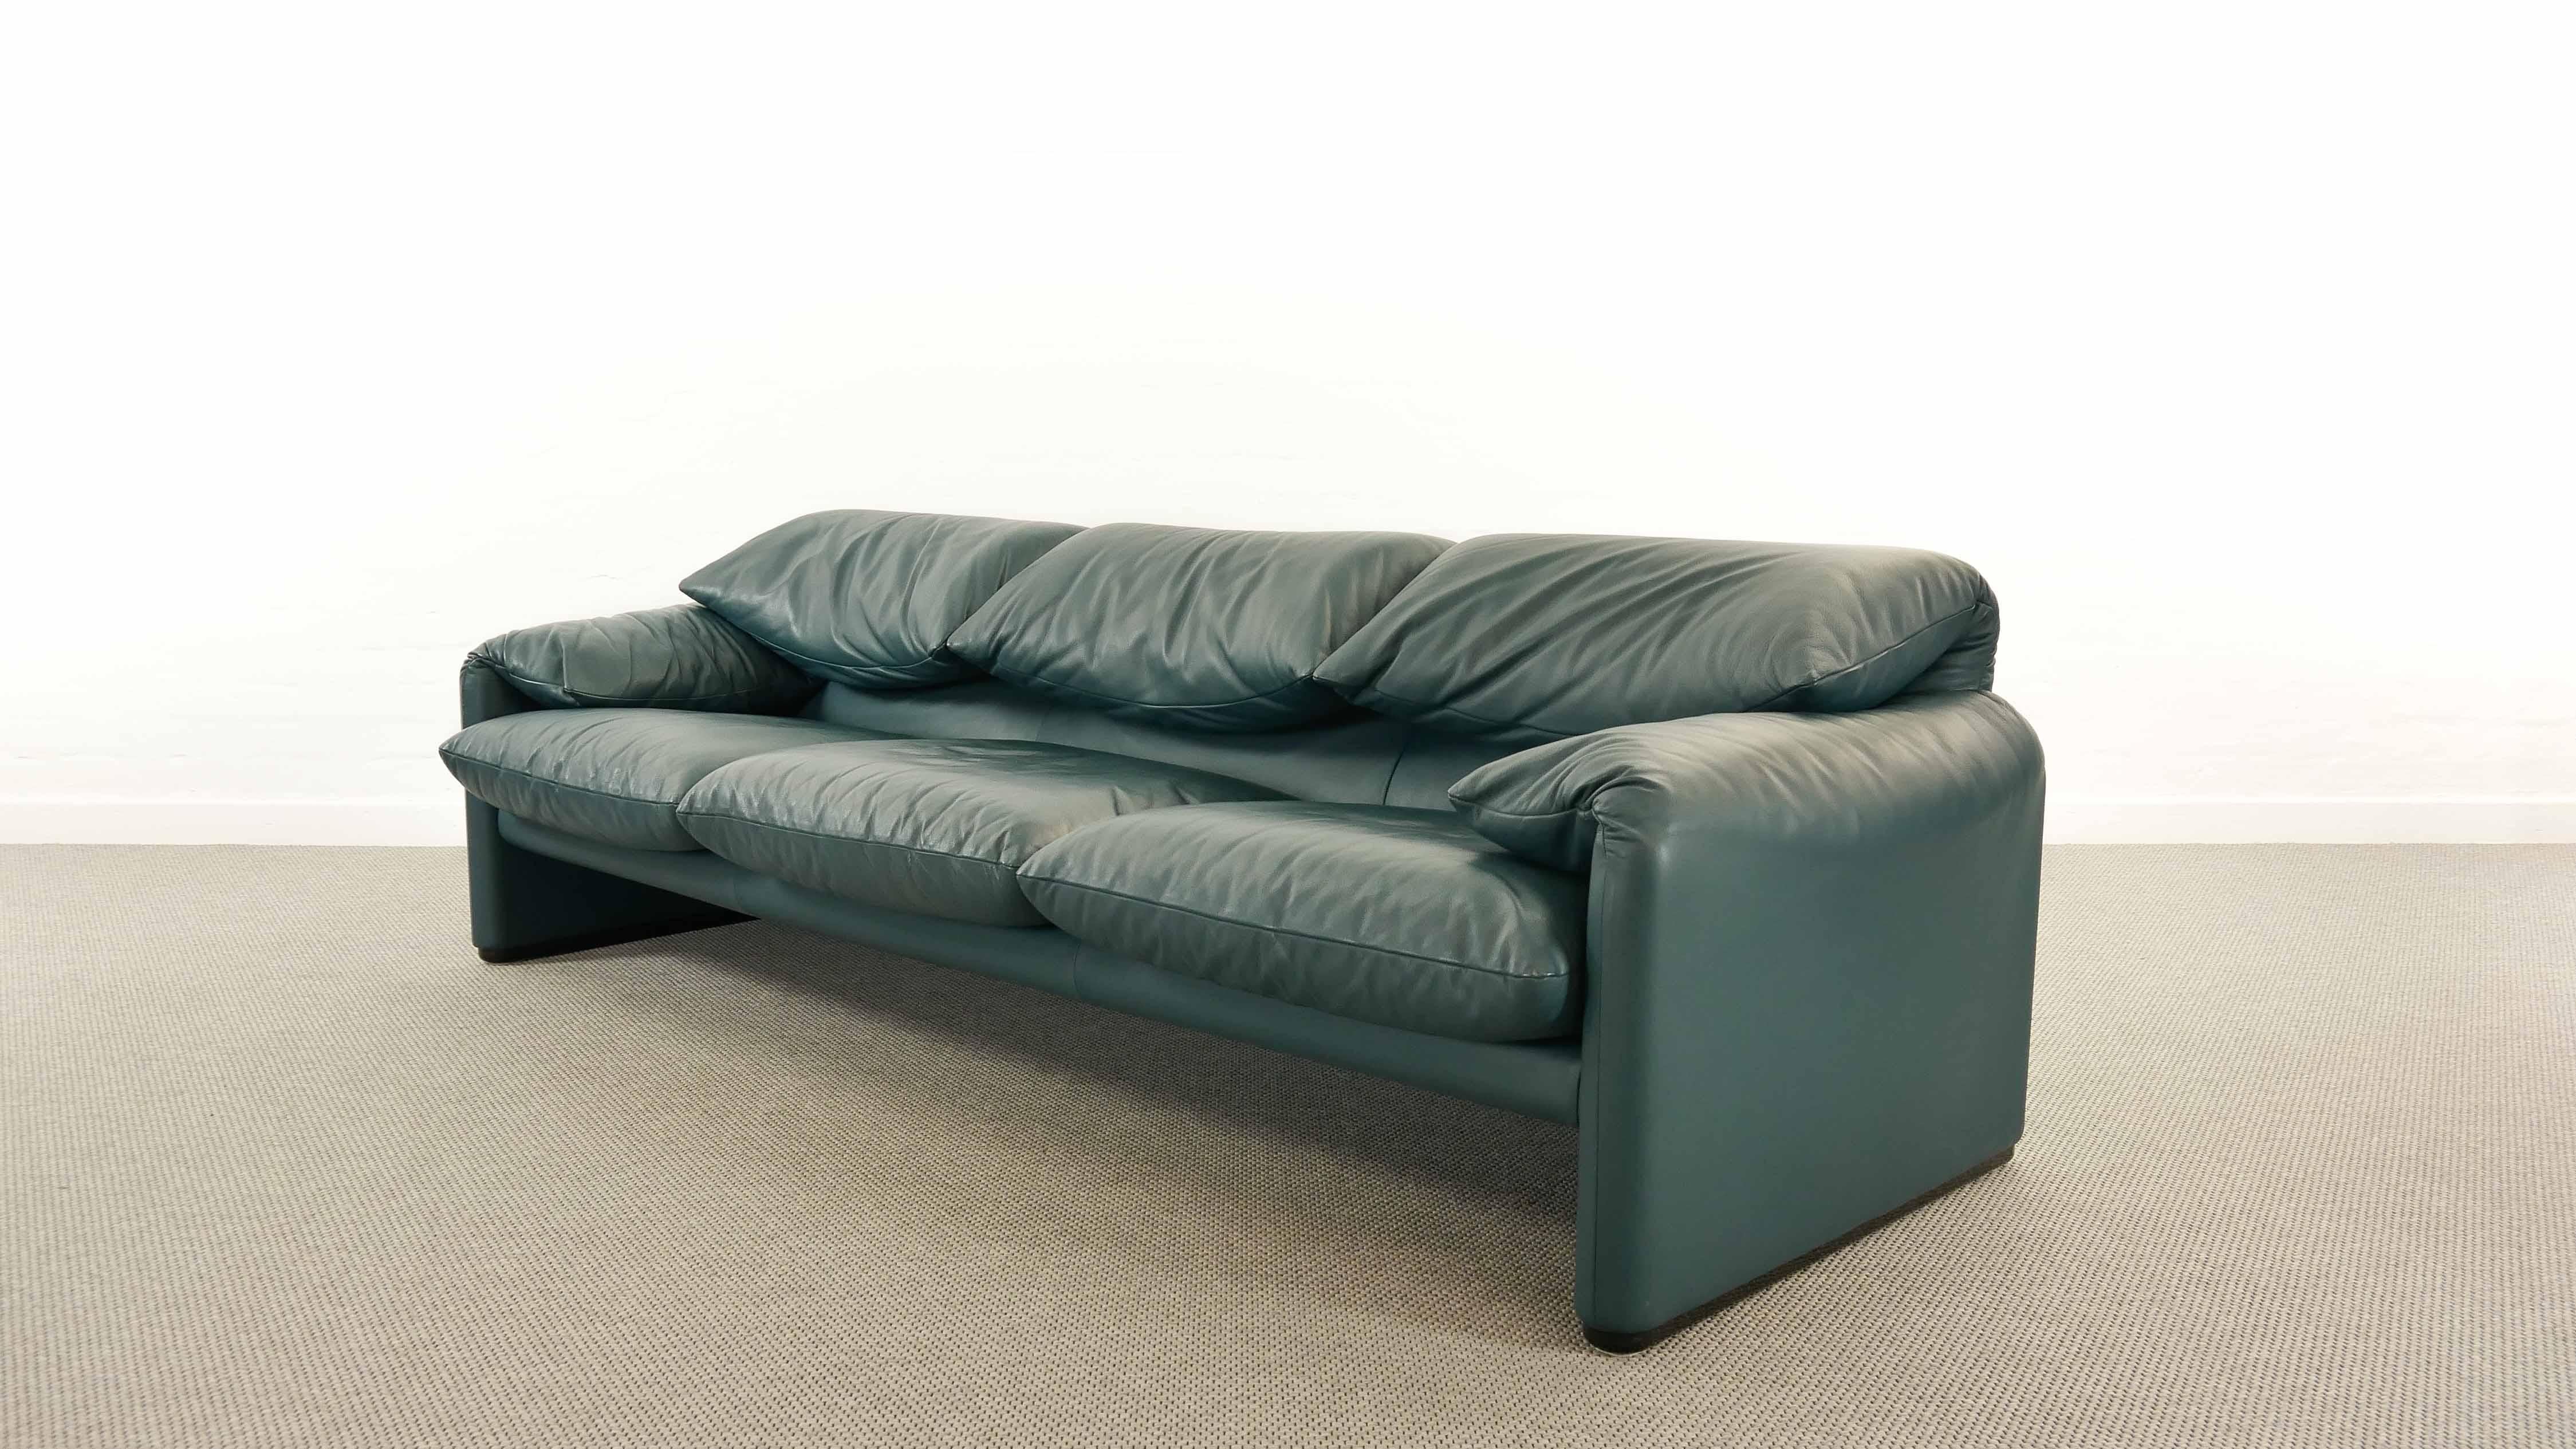 International Style Cassina Maralunga 3-Seat Sofa by Vico Magistretti in Petrol-Darkgreen Leather